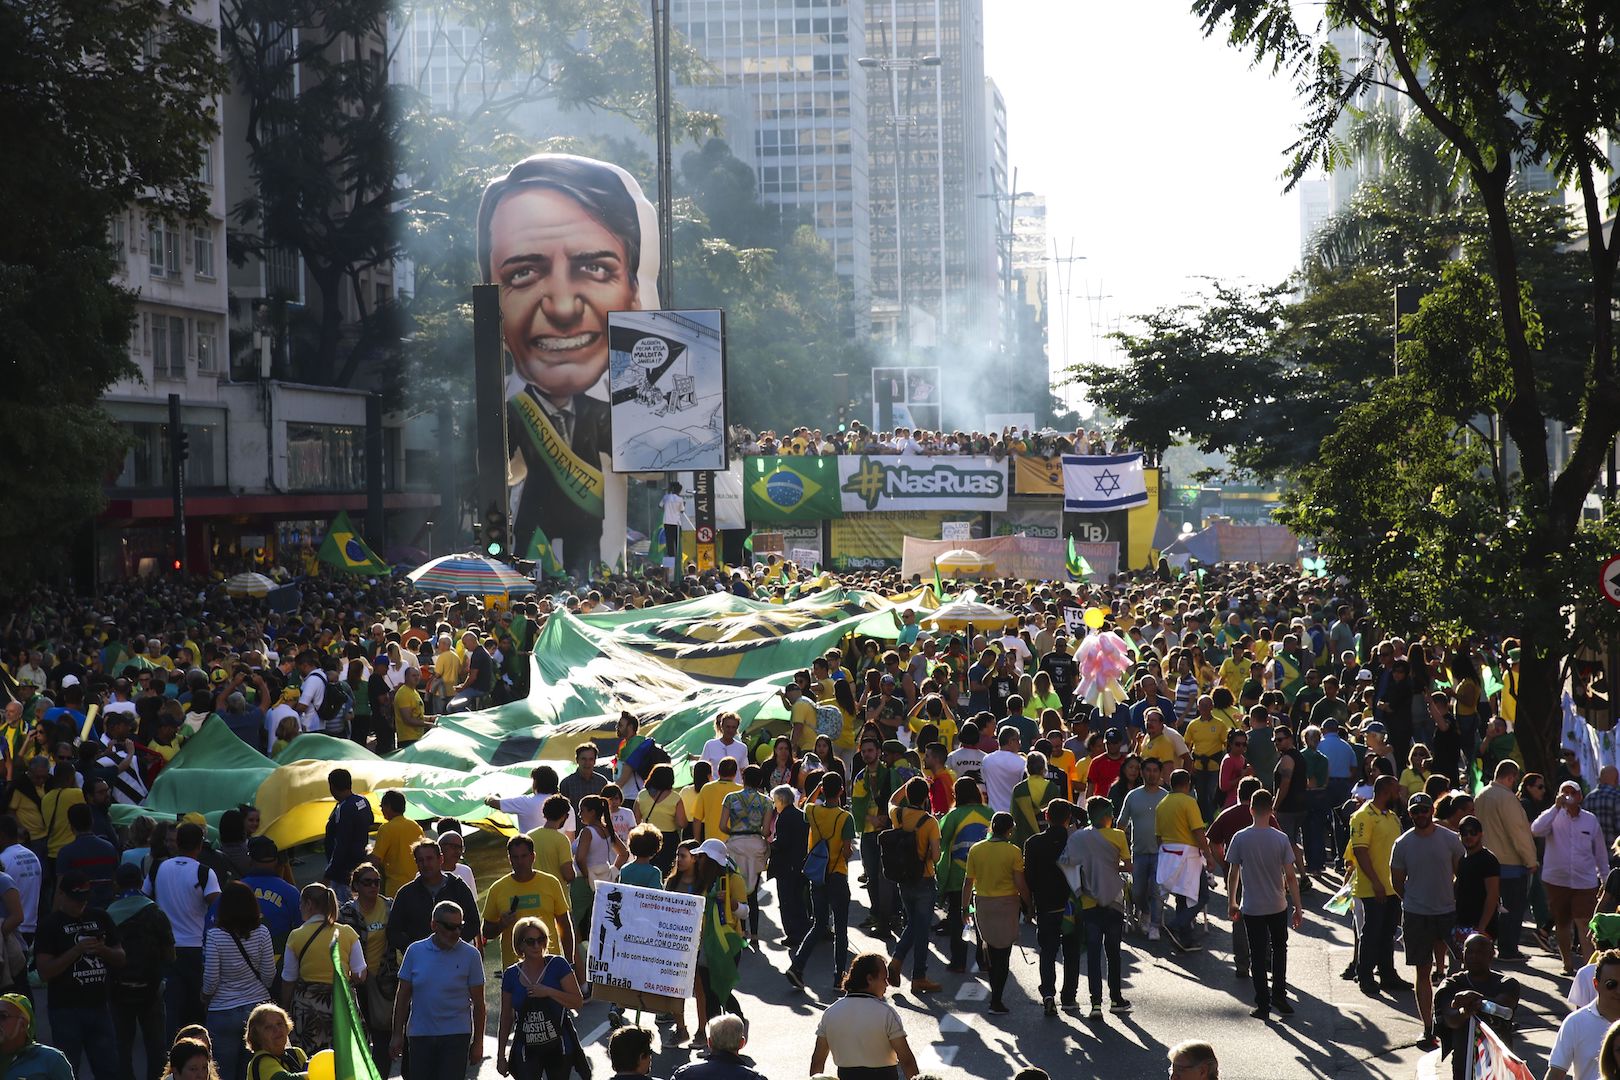 Brazilians took to Avenida Paulista in São Paulo to show support for Jair Bolsonaro's government